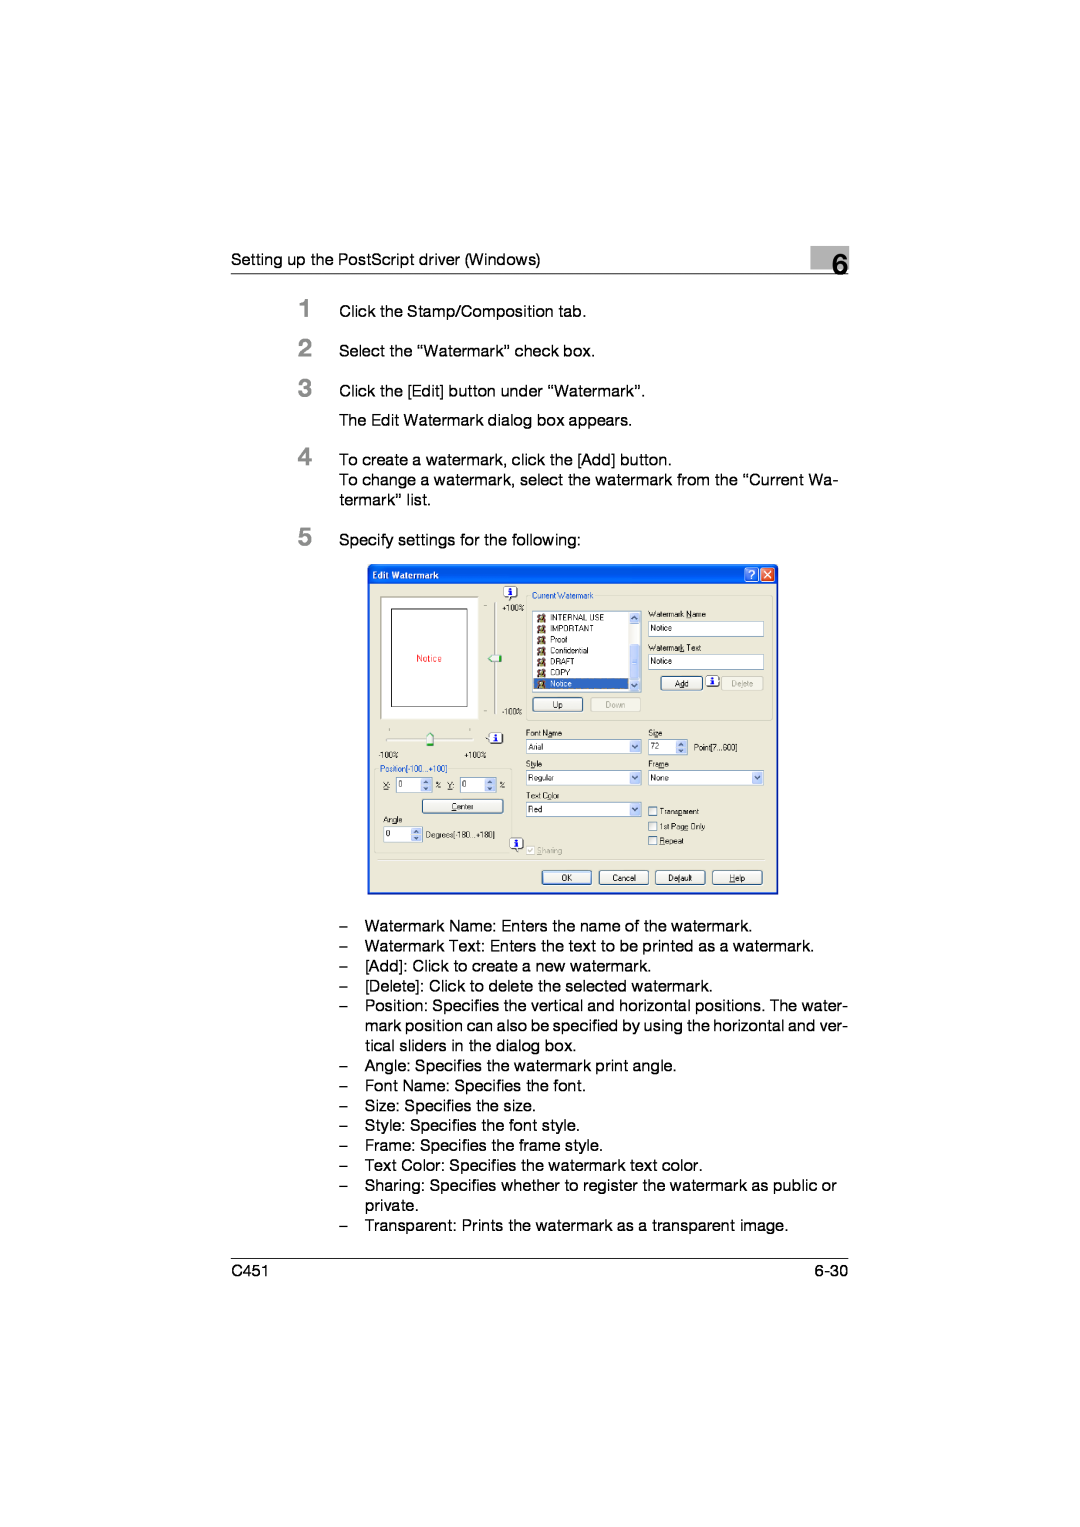 Konica Minolta C451 manual 1 2 3, Setting up the PostScript driver Windows 